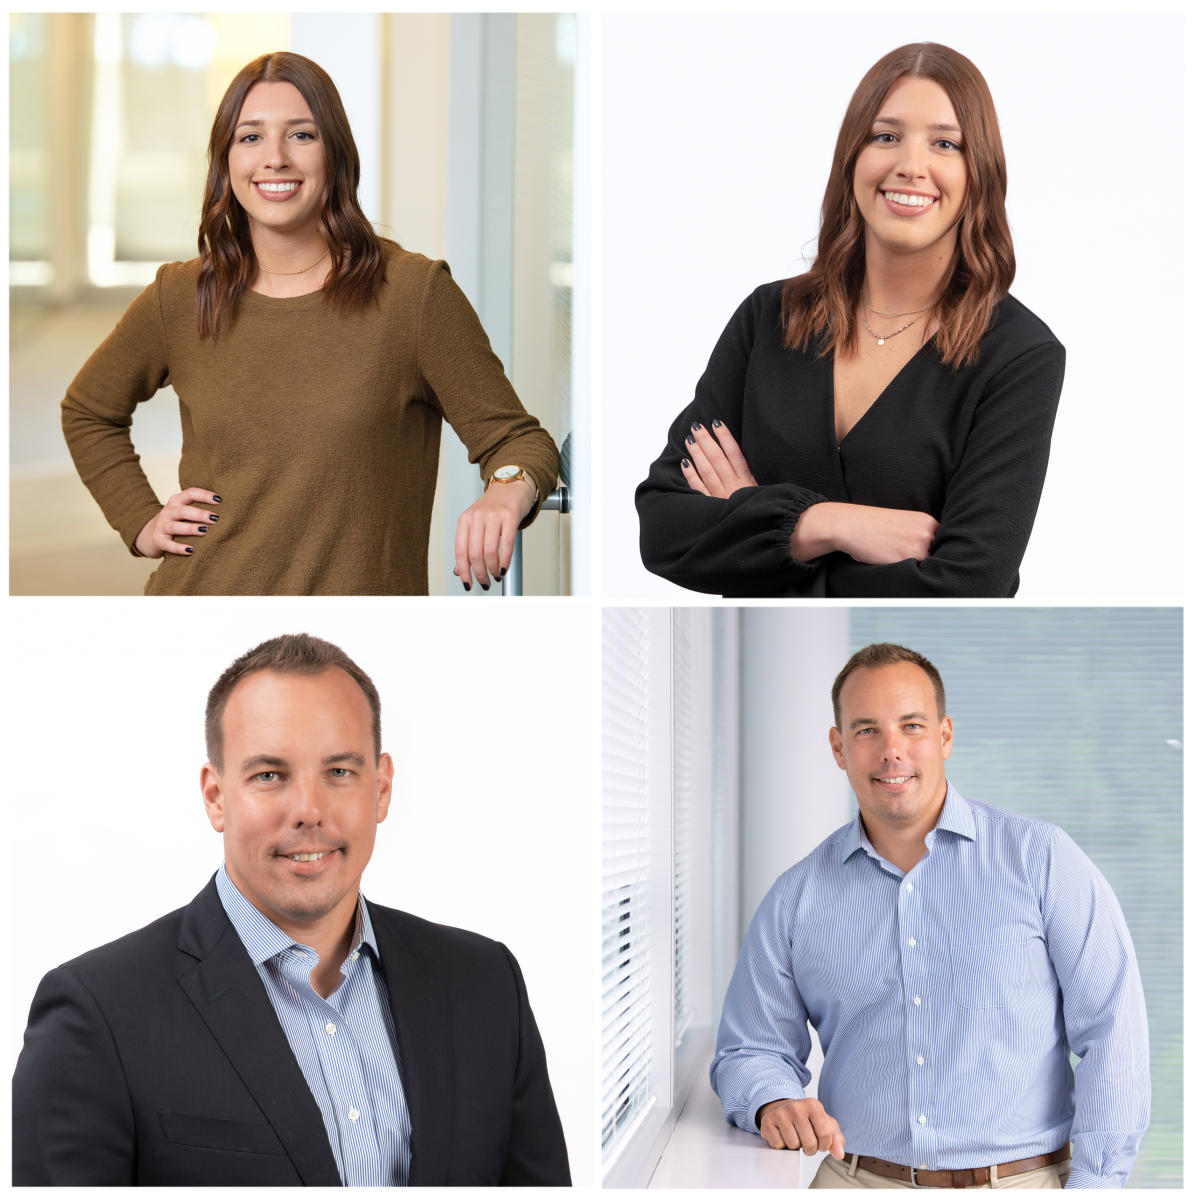 NJ Corporate Executive Portraits and Headshots